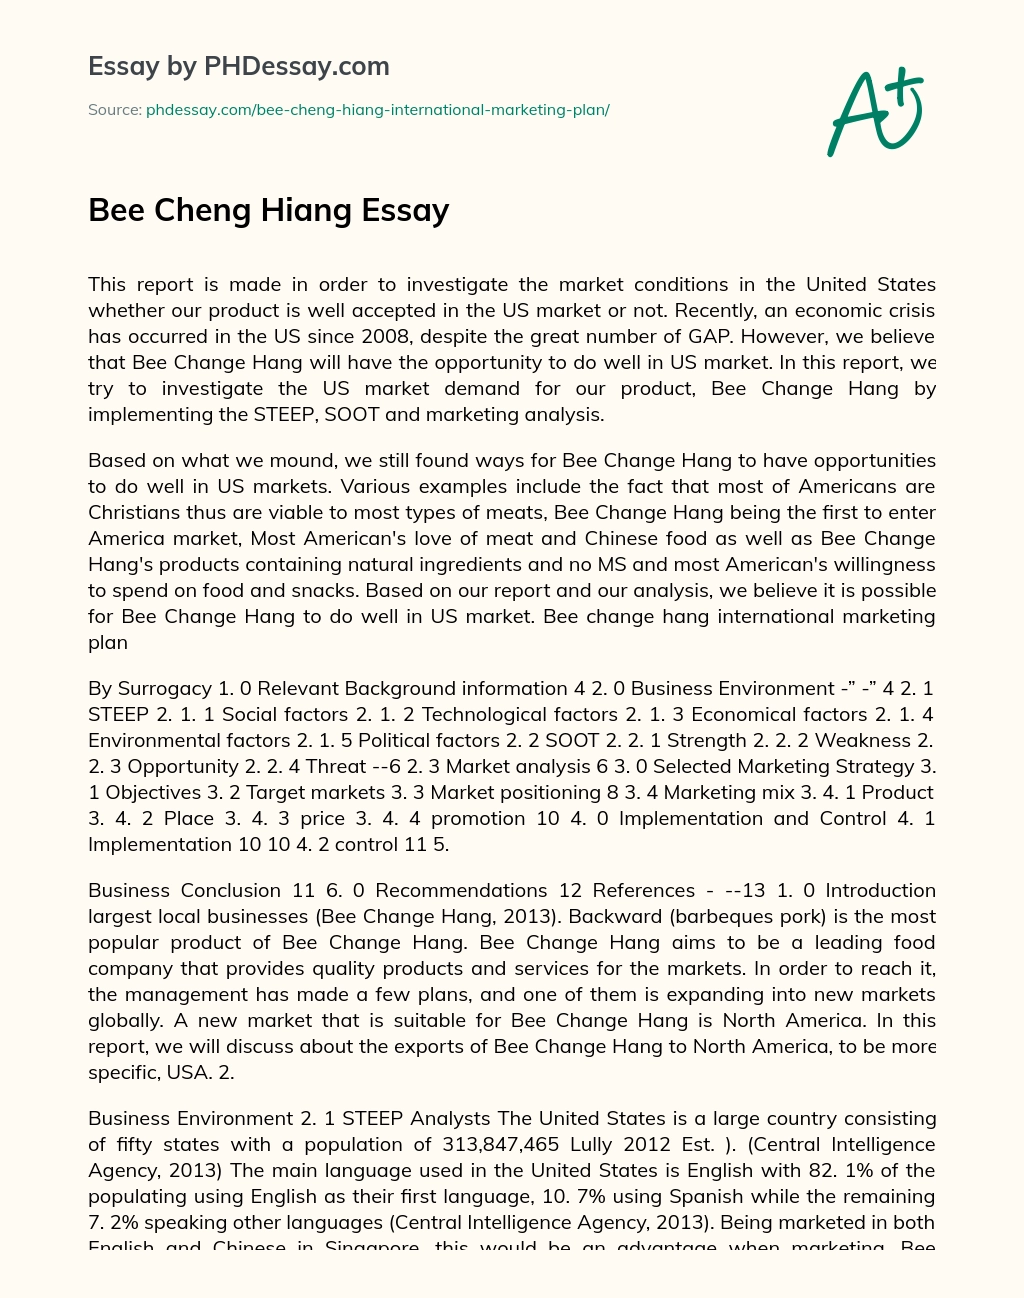 Bee Cheng Hiang Essay essay